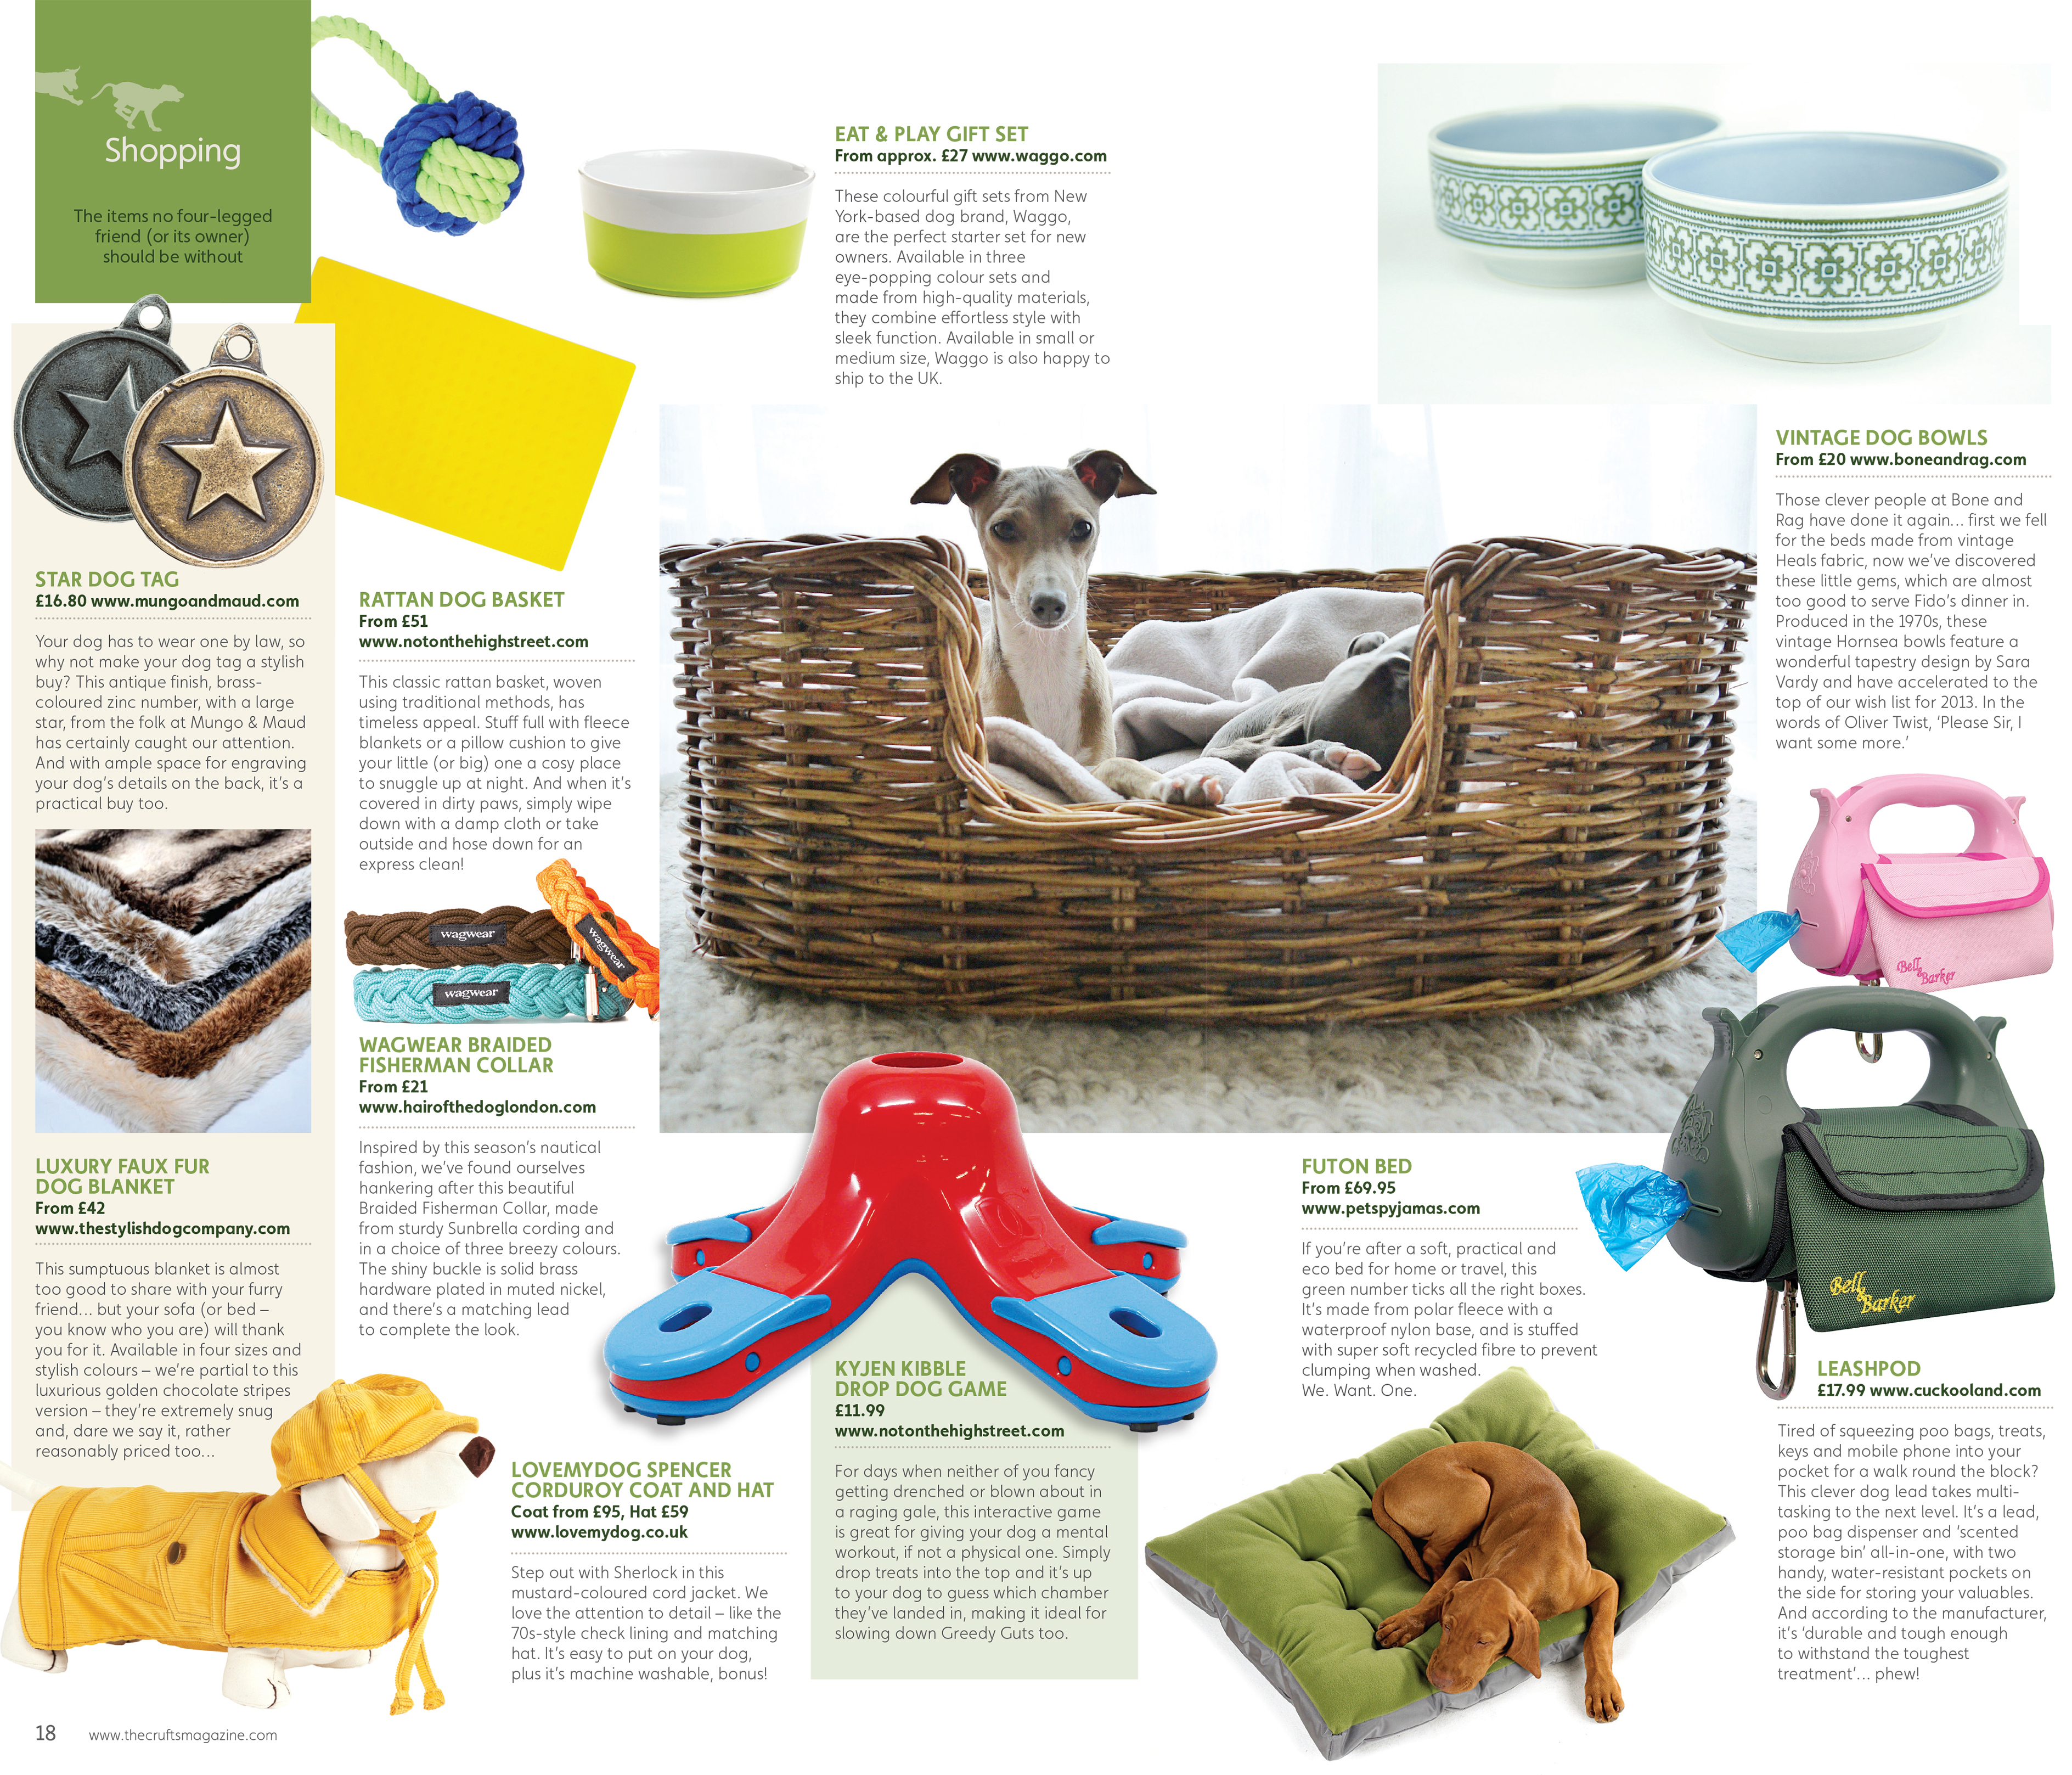 Crufts Magazine March 2013 Waggo Designer Dog Bowls and Toys